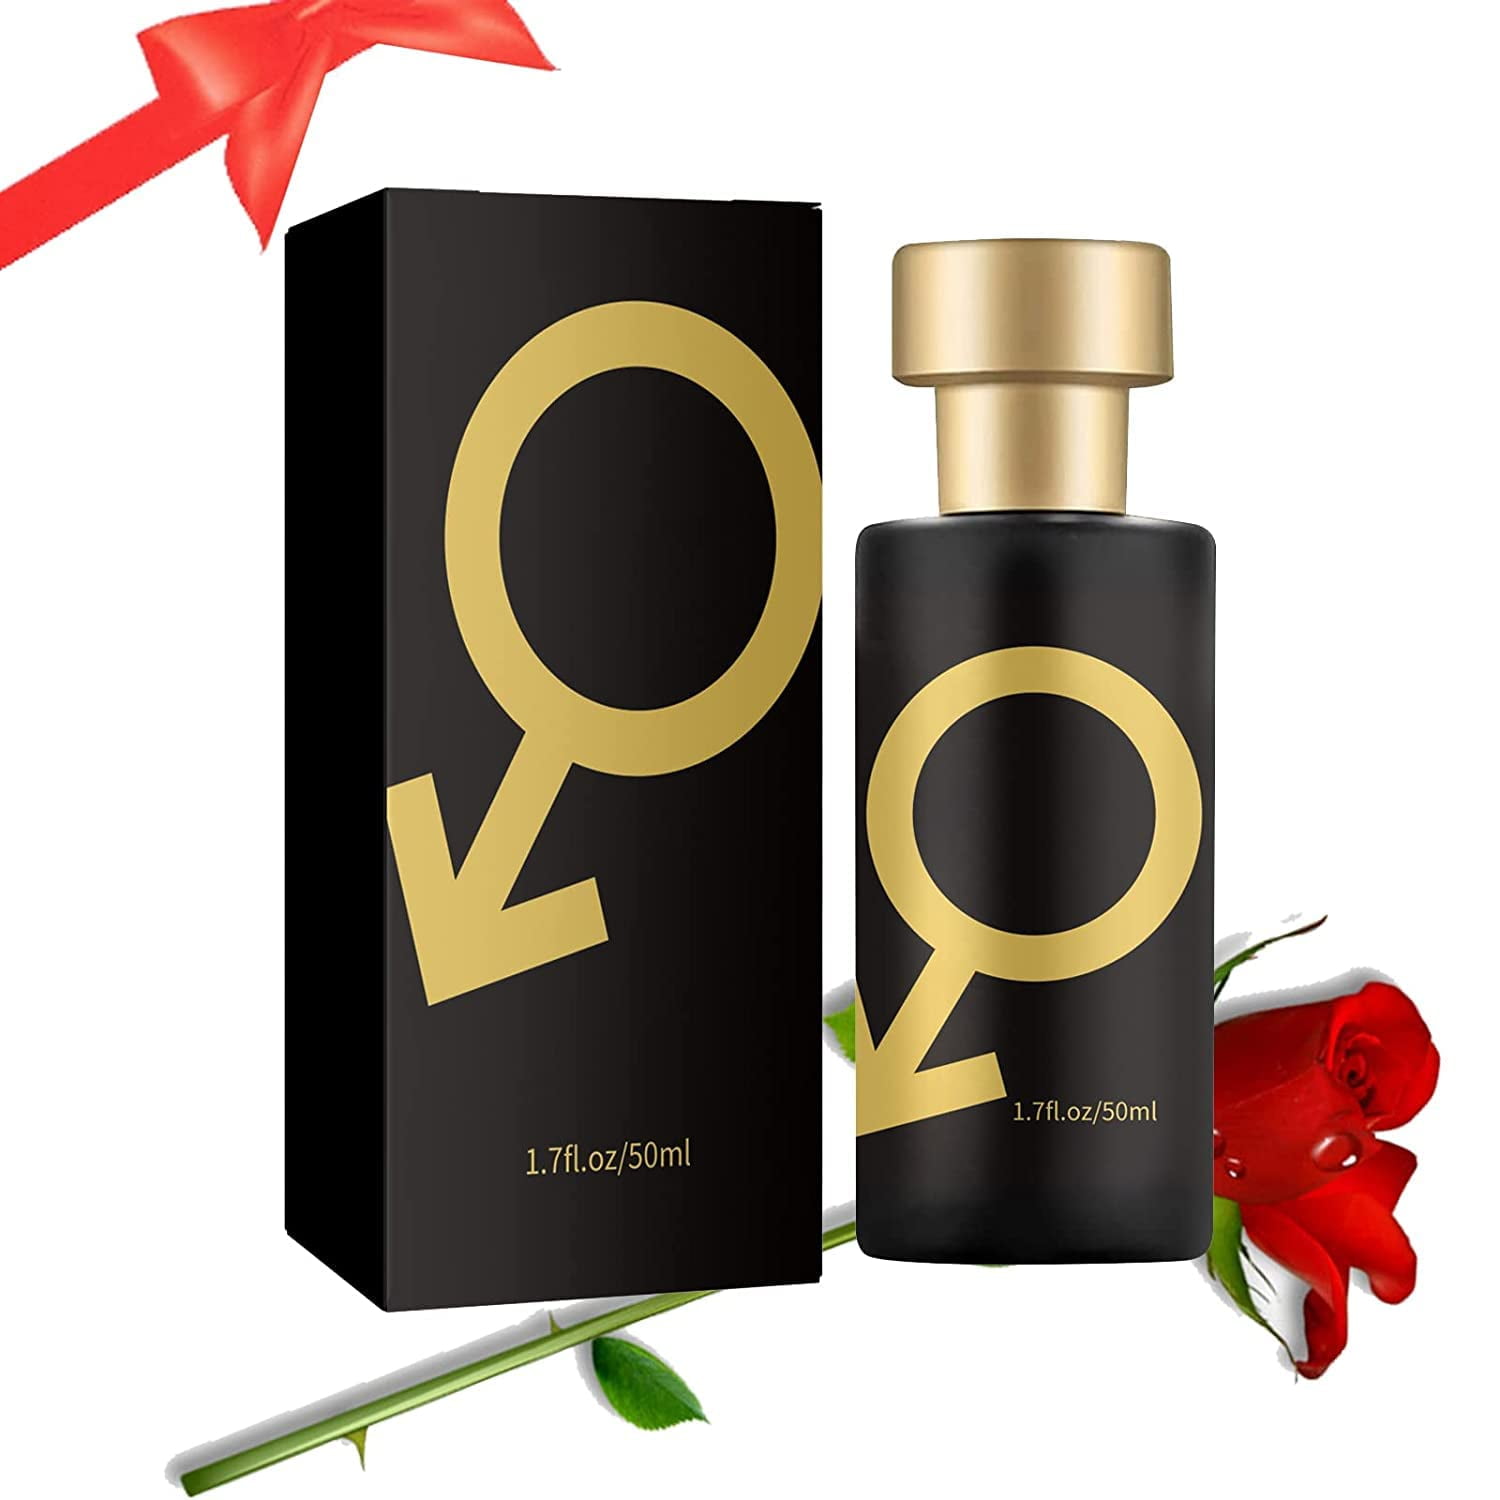 Golden Lure Pheromone Perfume, Lure Him Perfume for Men, Pheromone Cologne  for Men Attract Women, Lure Her Romantic Pheromone Glitter Perfume for